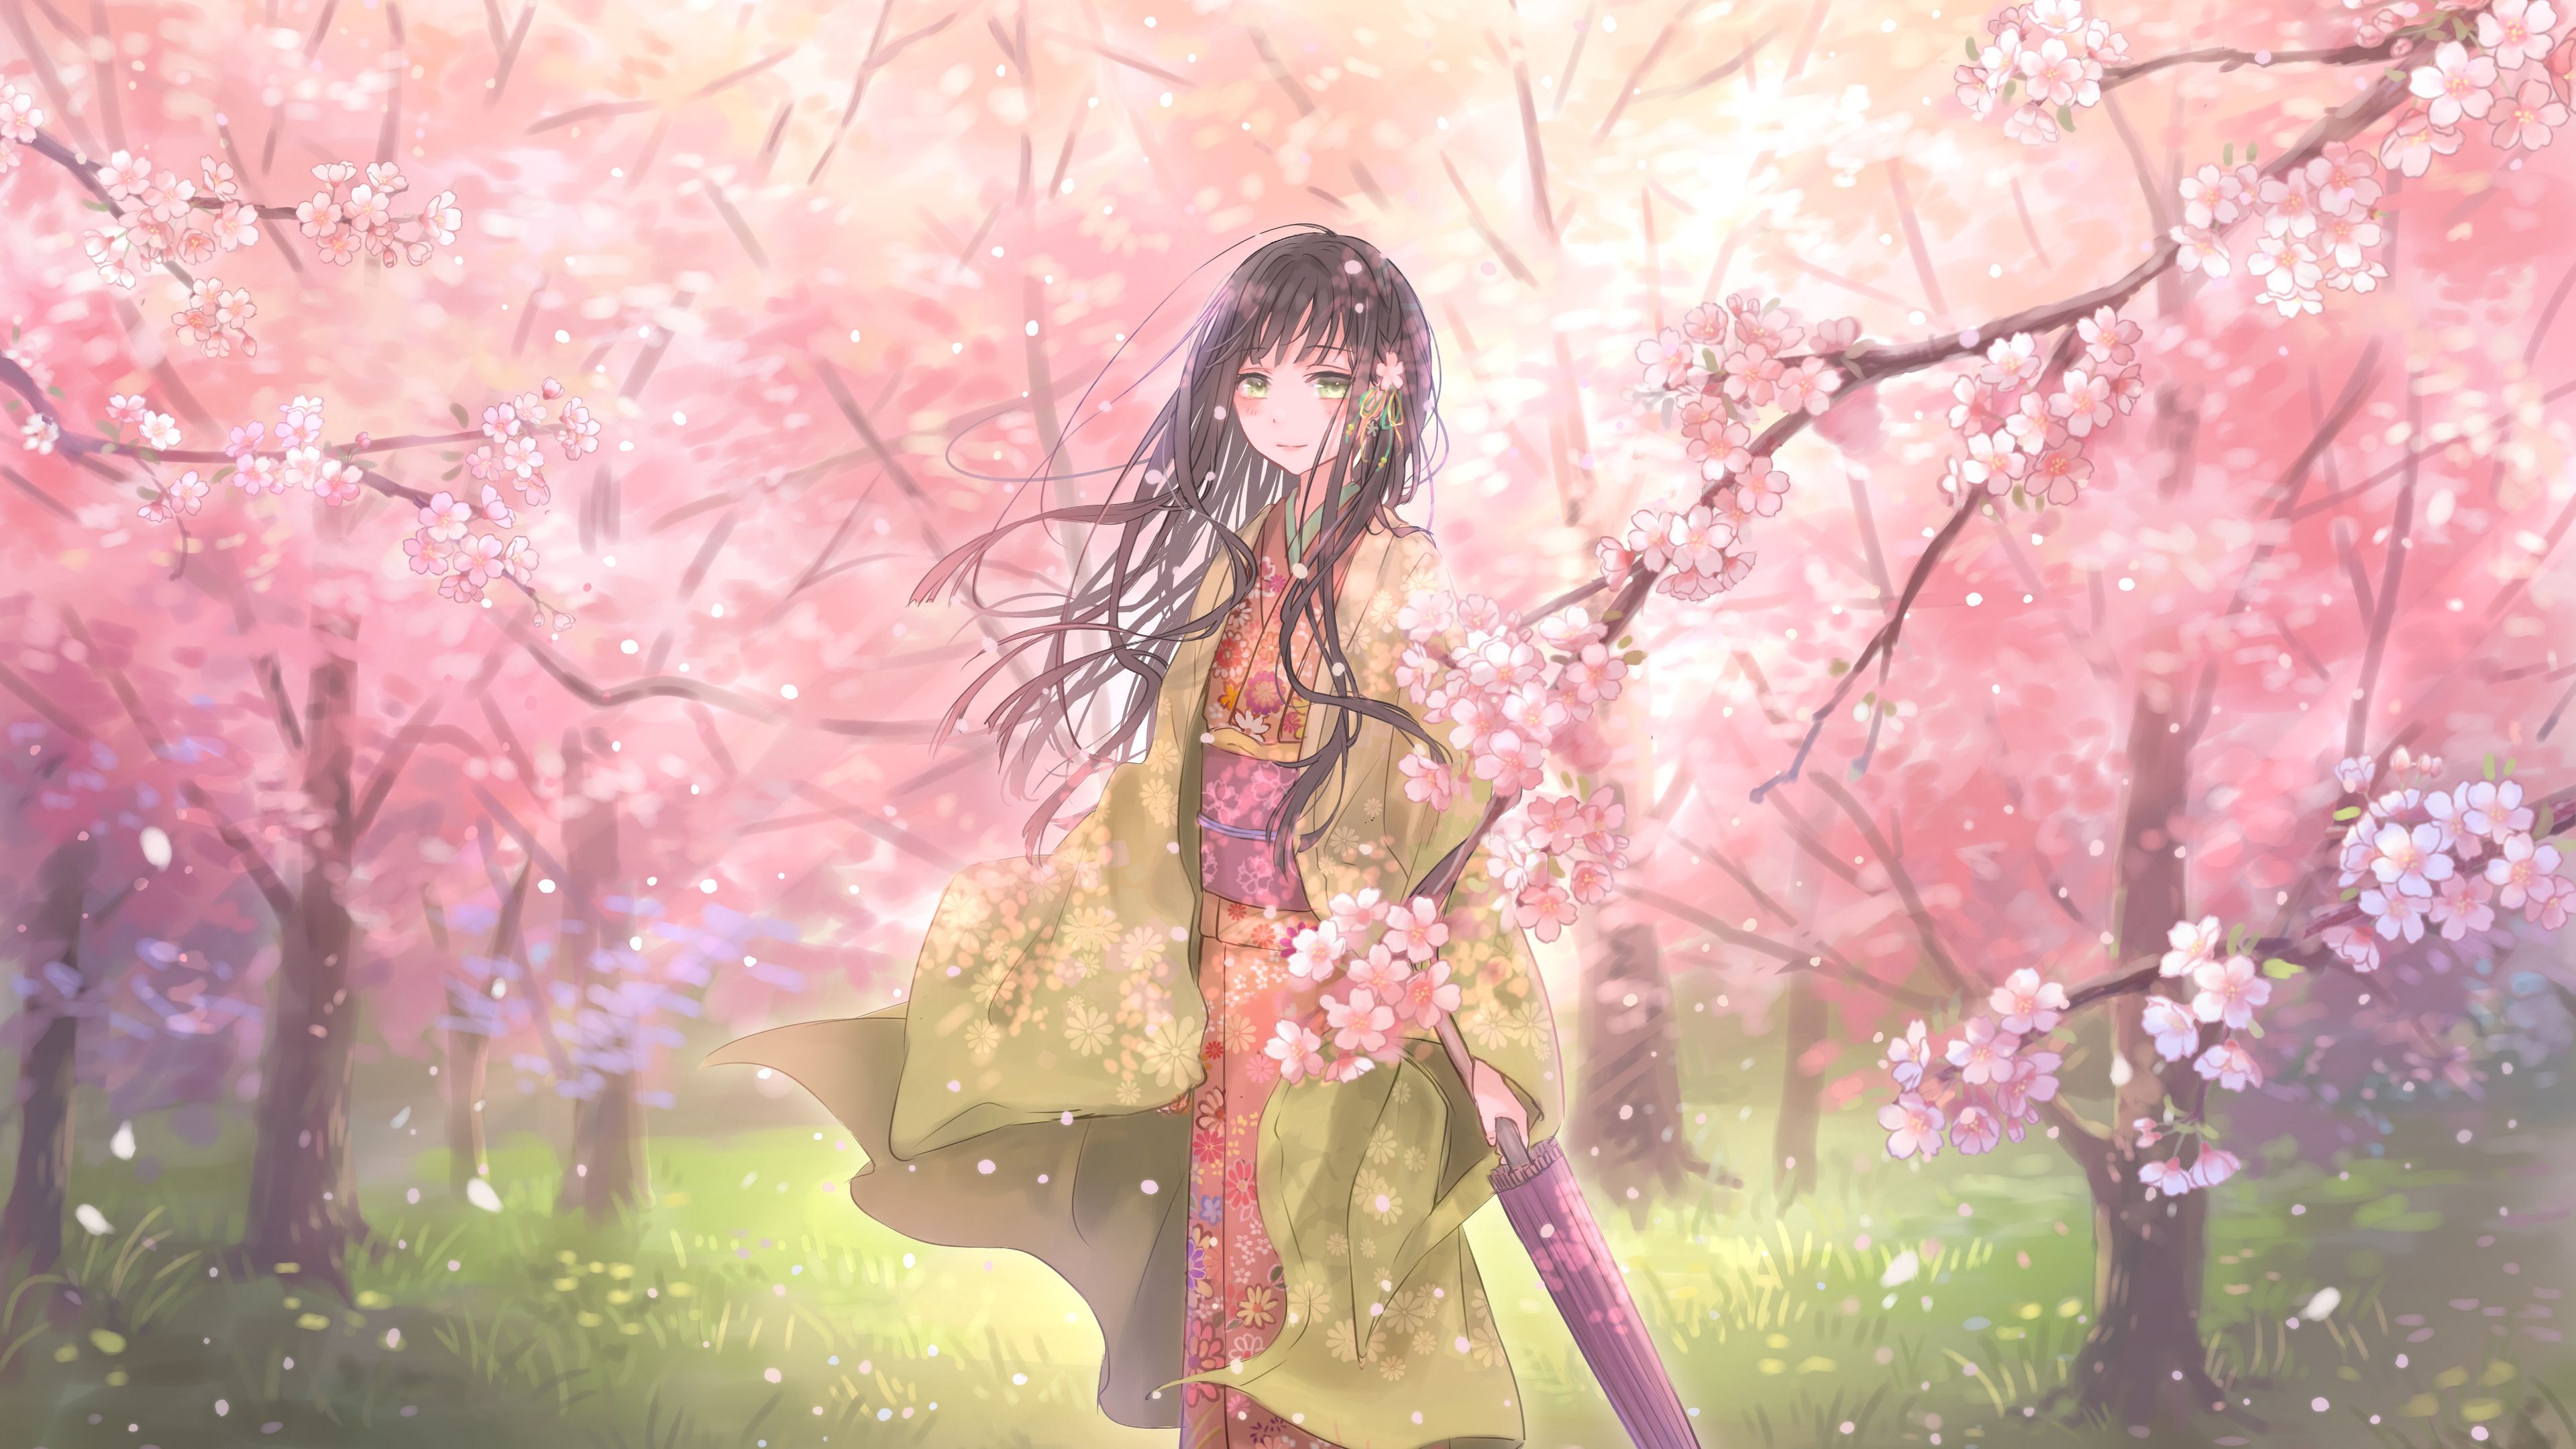 Download wallpaper 3840x2160 girl, kimono, umbrella, sakura, petals, anime,  art 4k uhd 16:9 hd background